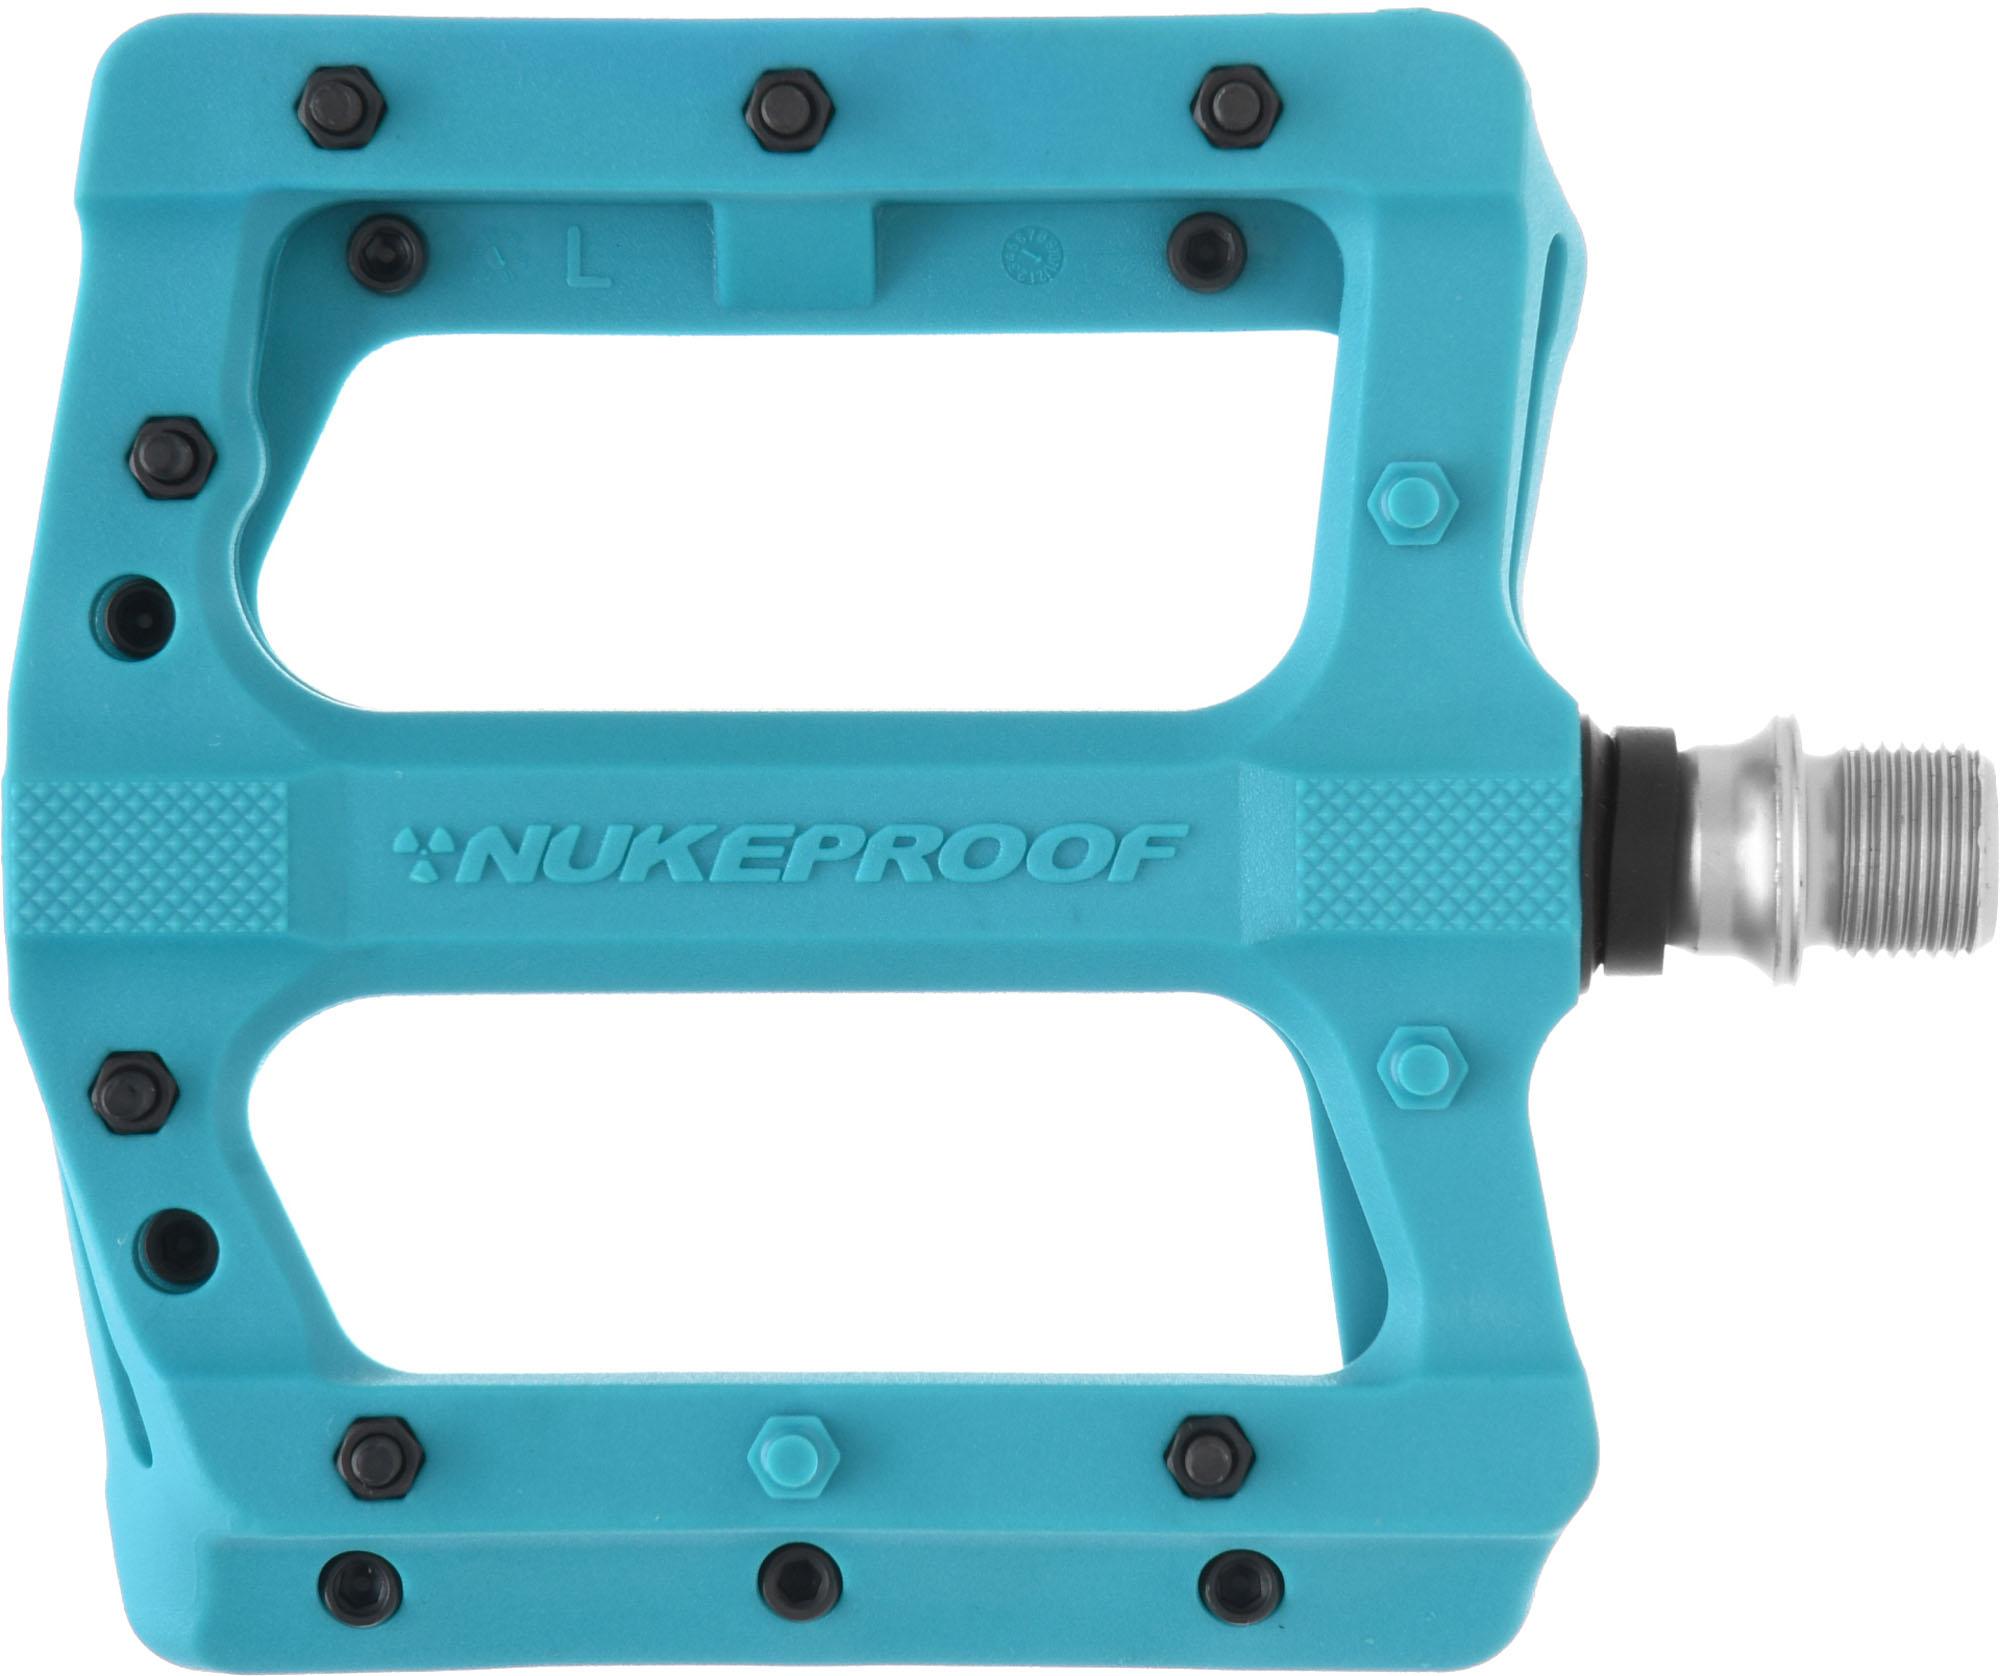 Nukeproof Neutron Evo (electron Evo) Flat Pedals - Turquoise